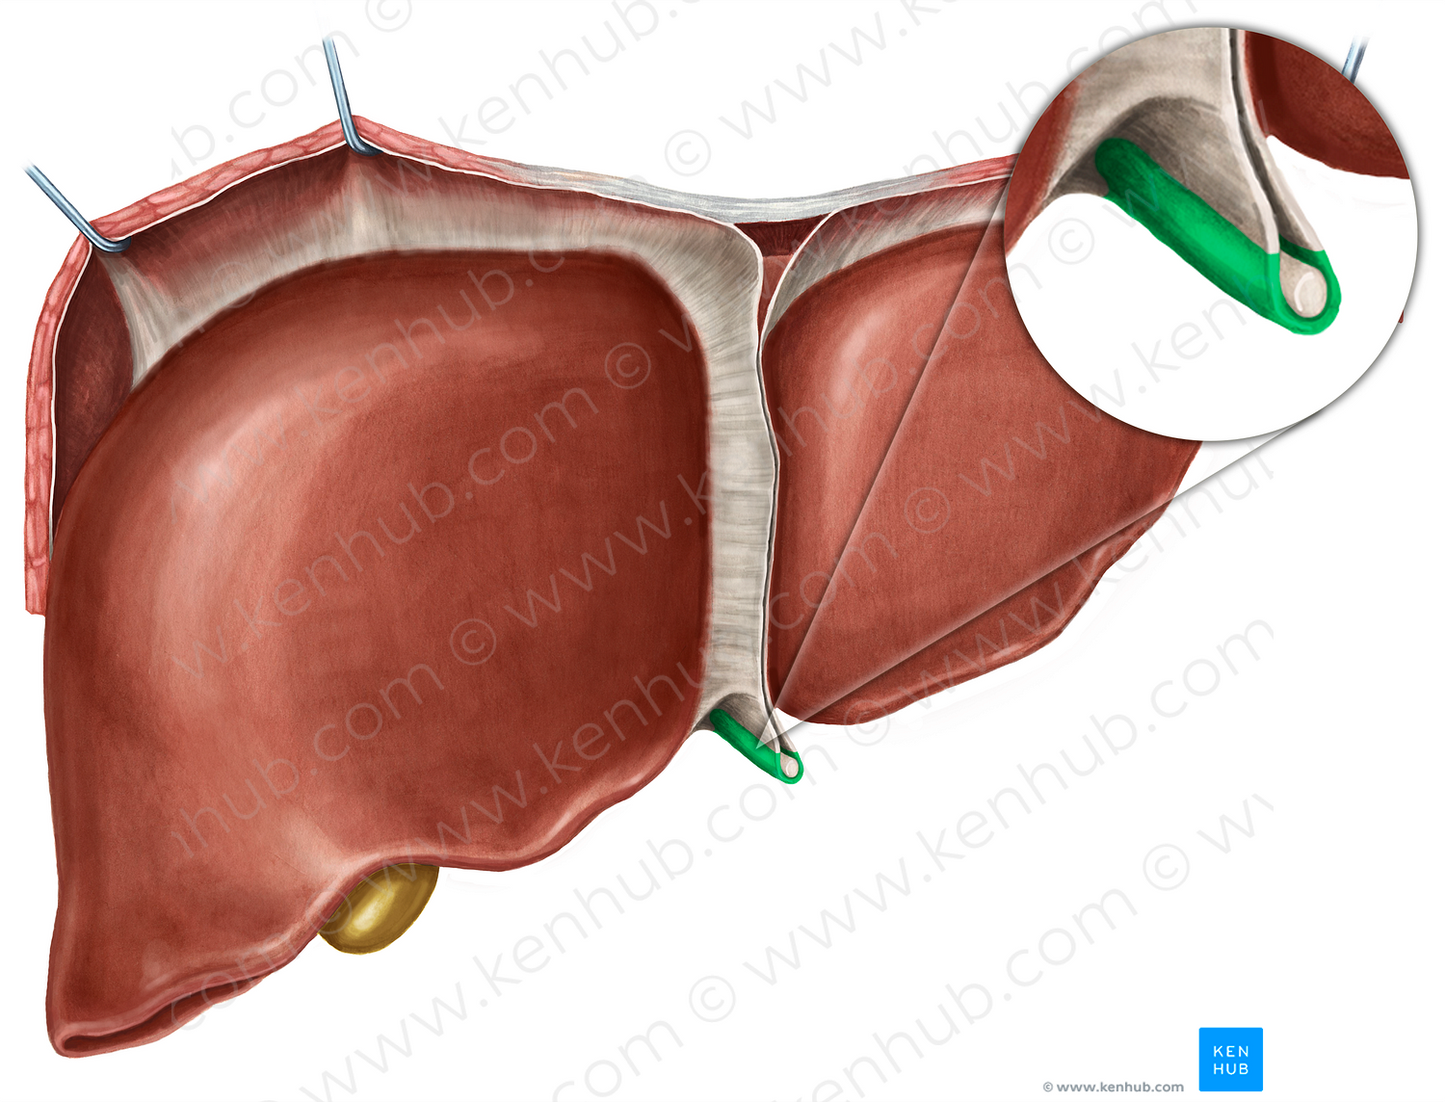 Round ligament of liver (#4629)